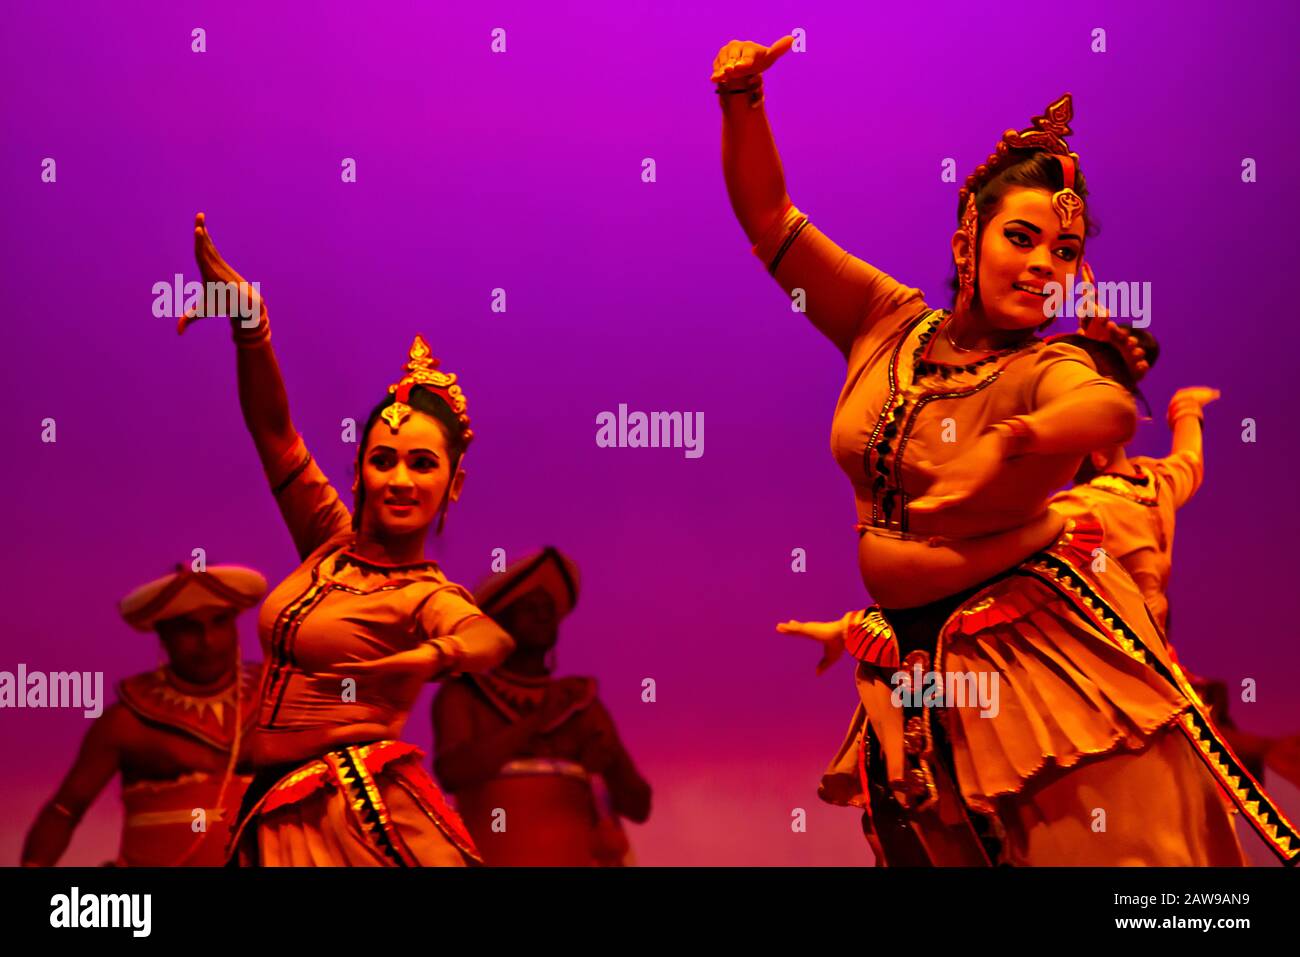 Lokale Tänzerinnen in traditionellen Kostümen in Kandy, Sri Lanka Stockfoto